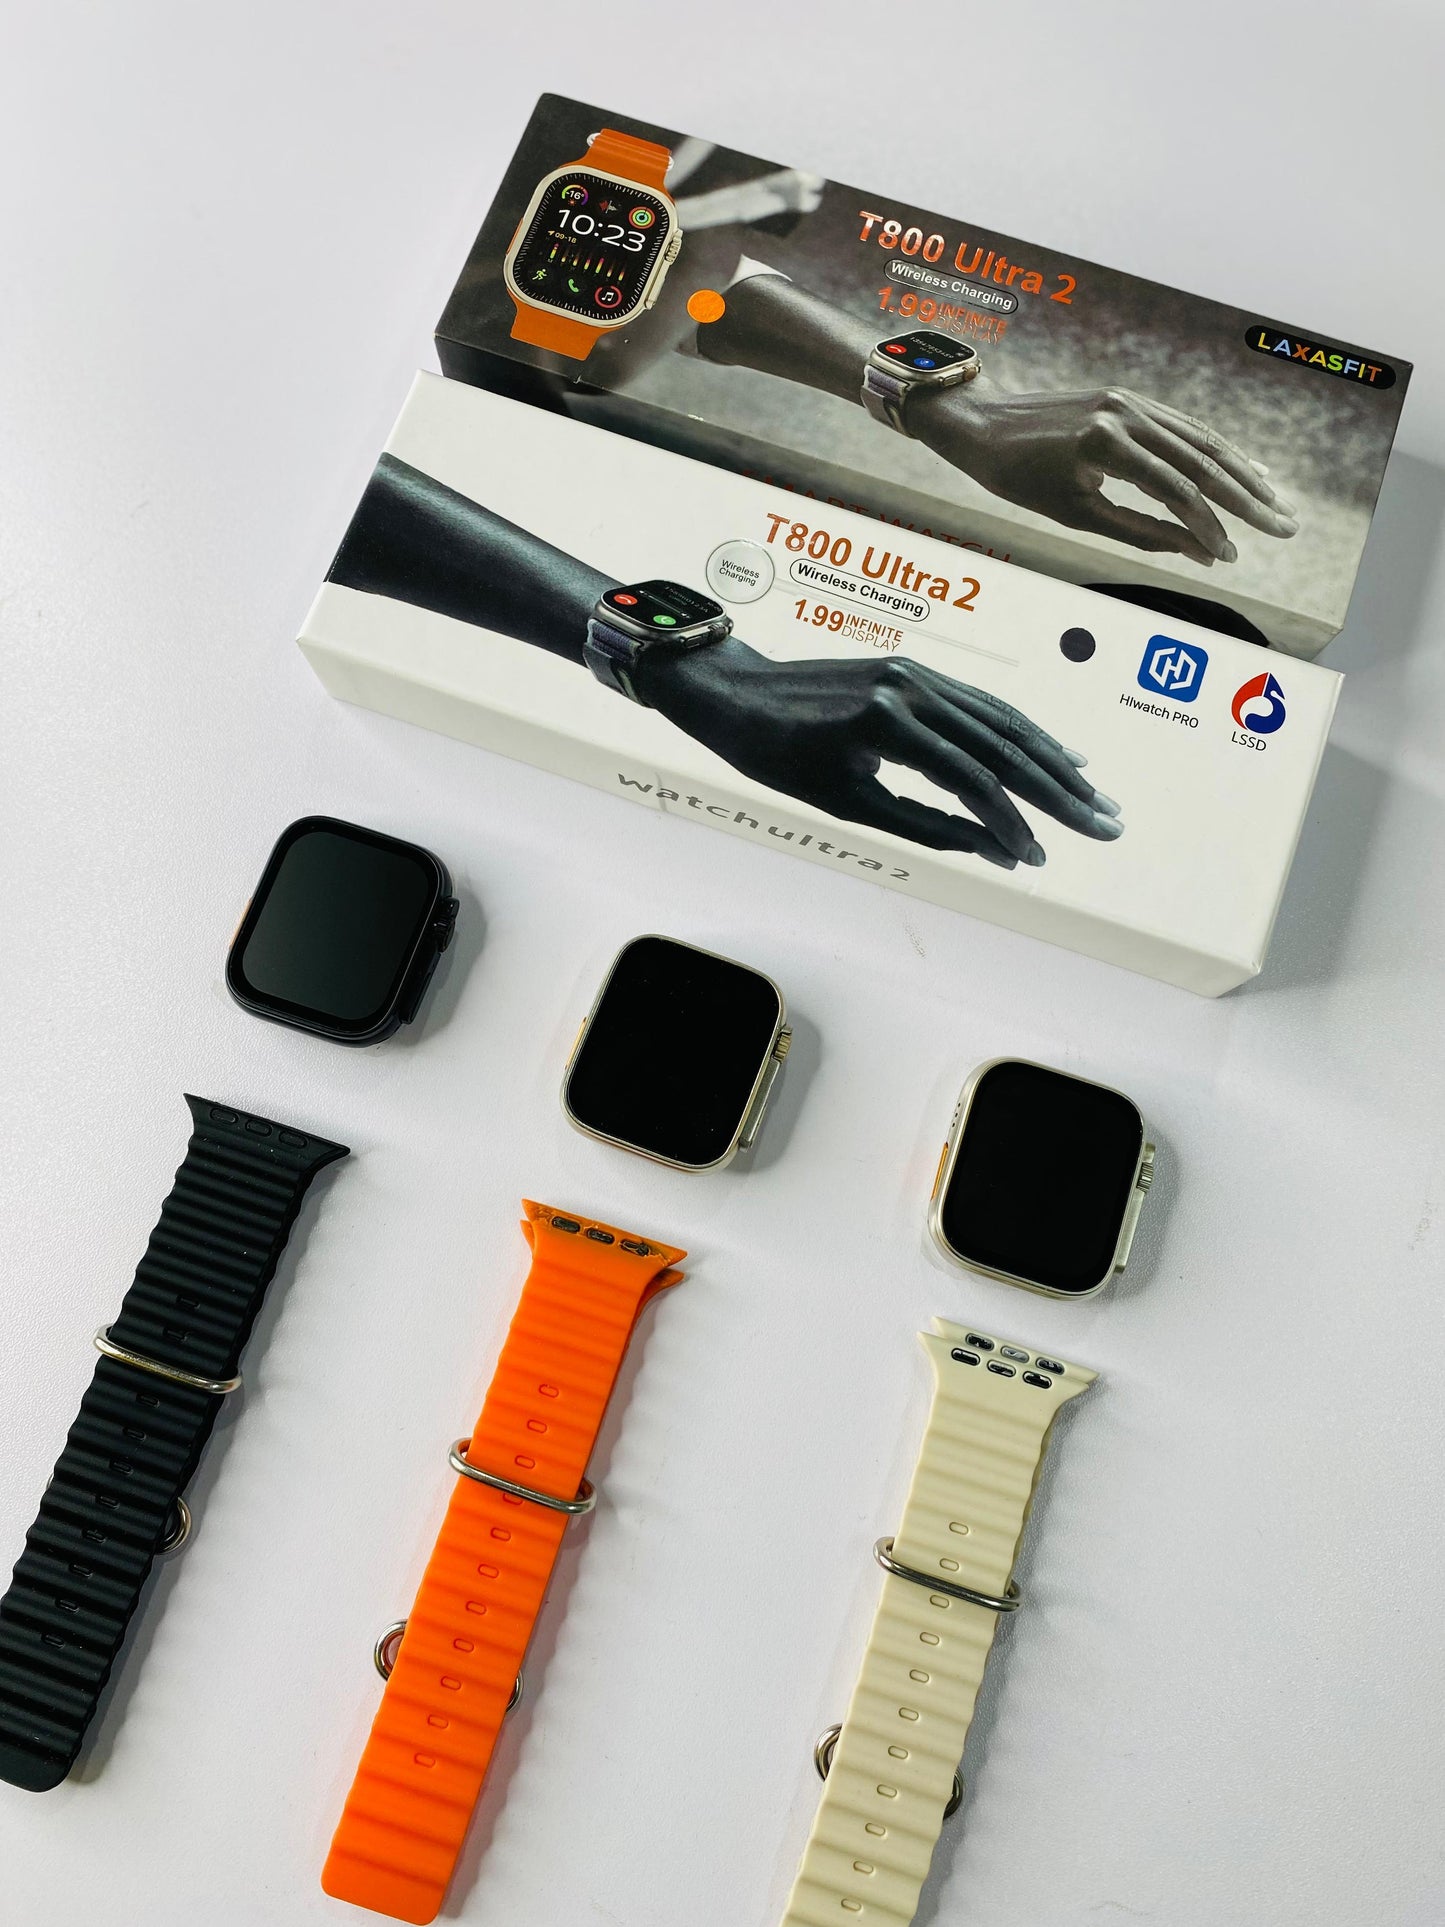 T800 ultra 2 smart watch special offer - HT Bazar